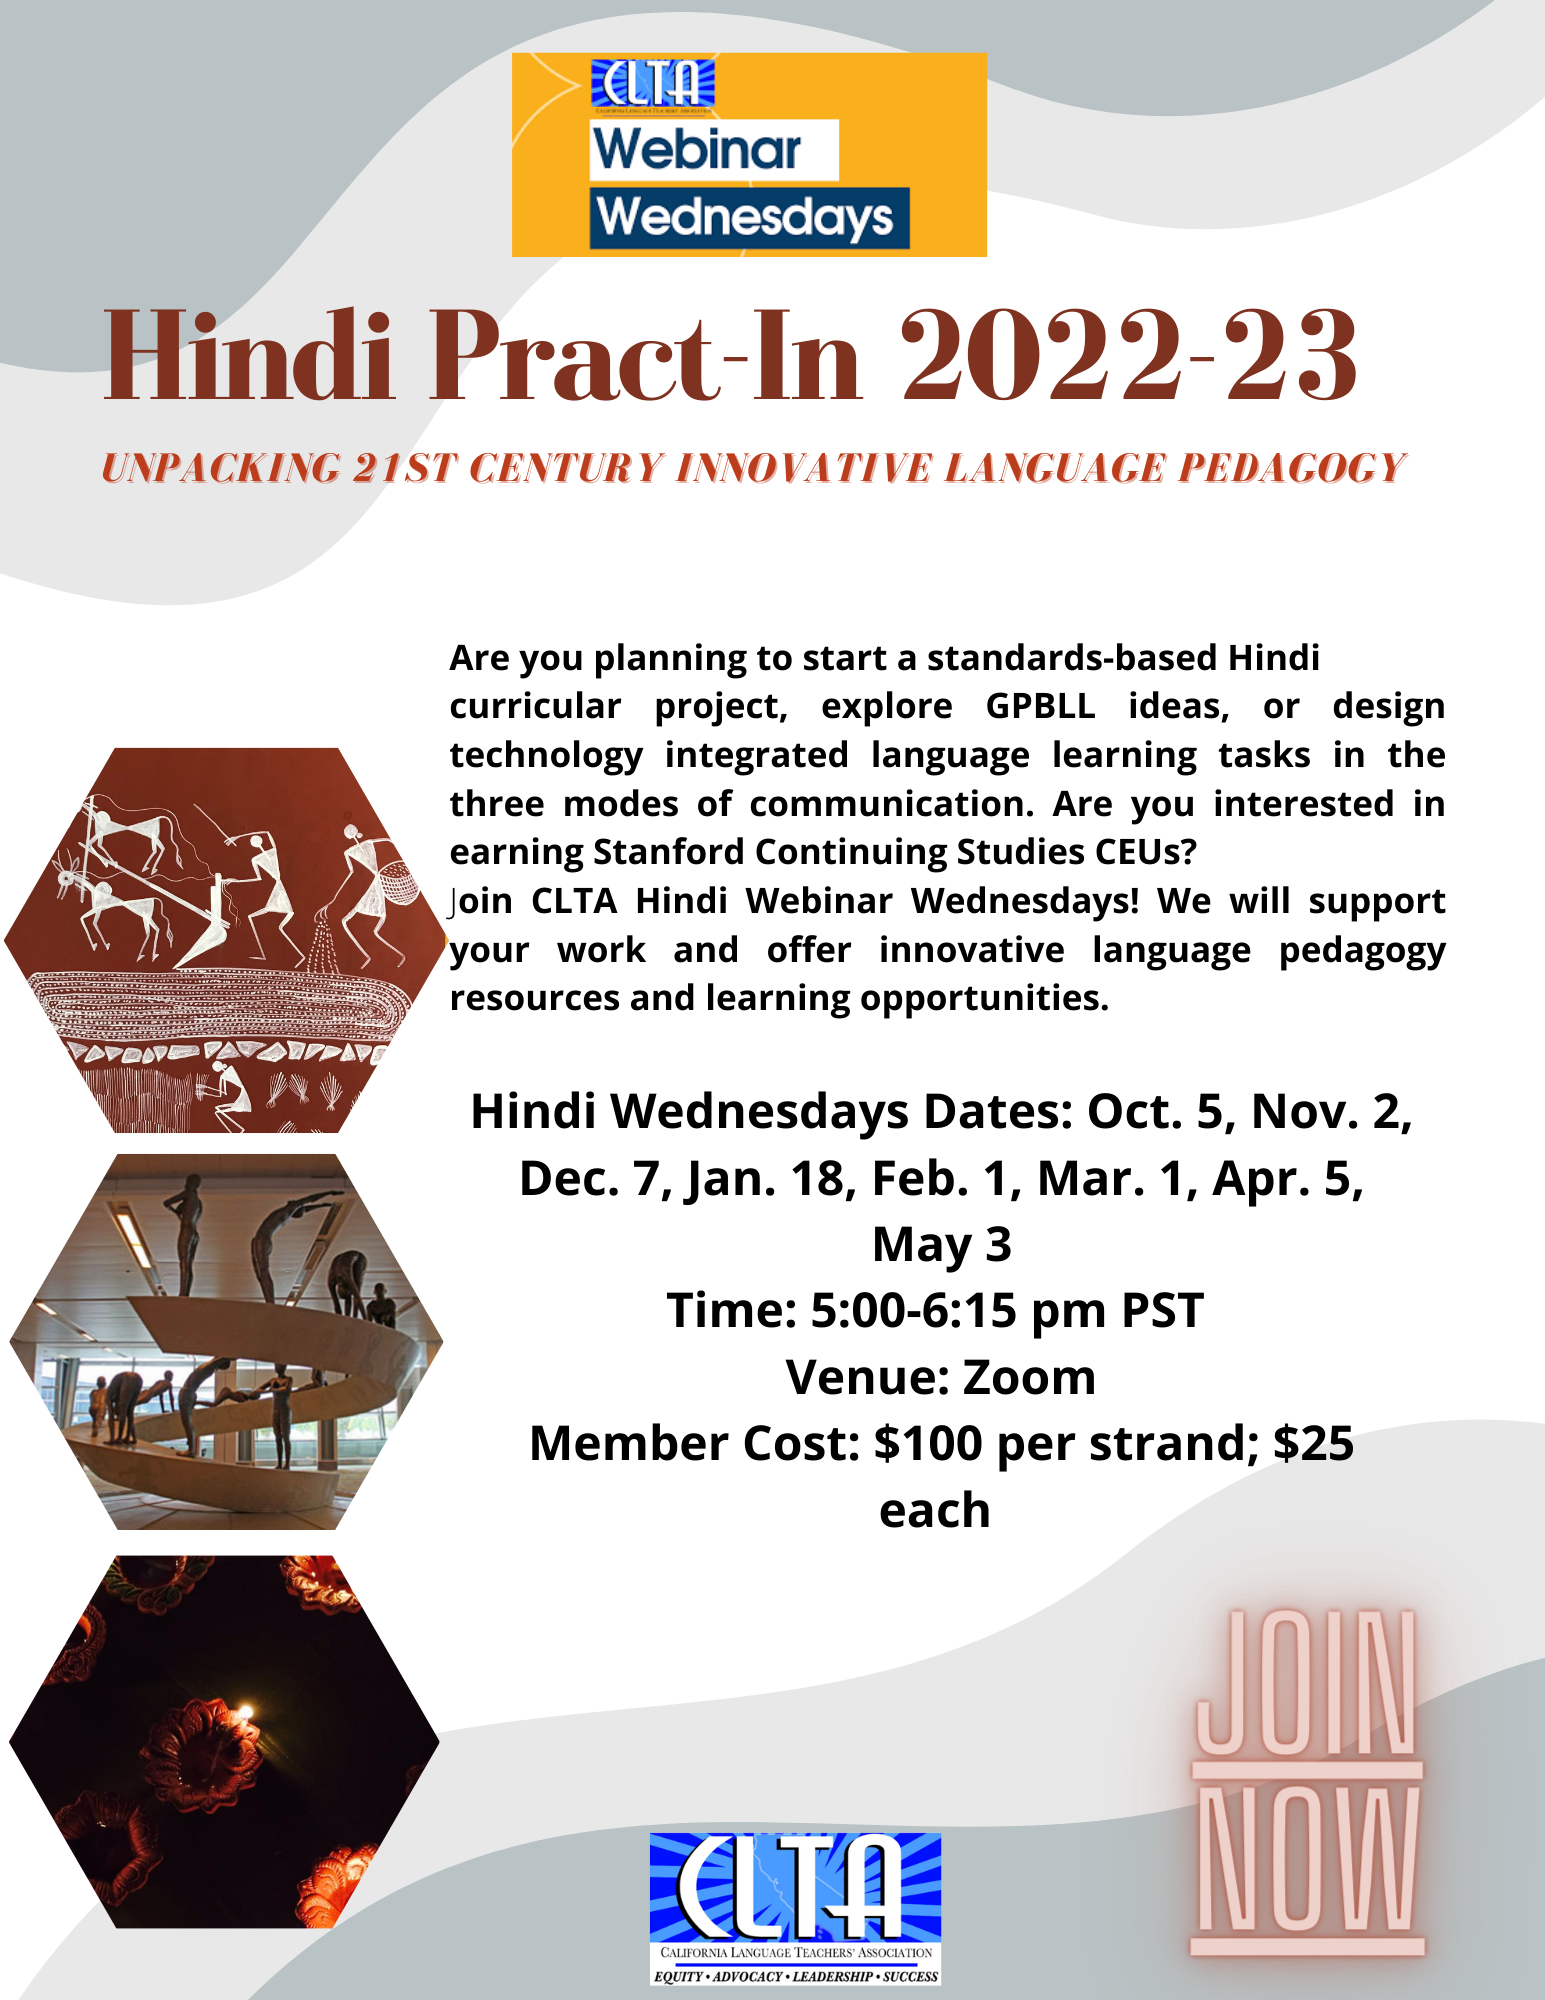 Pract-In’s – Hindi Wednesdays – December 7, 2022